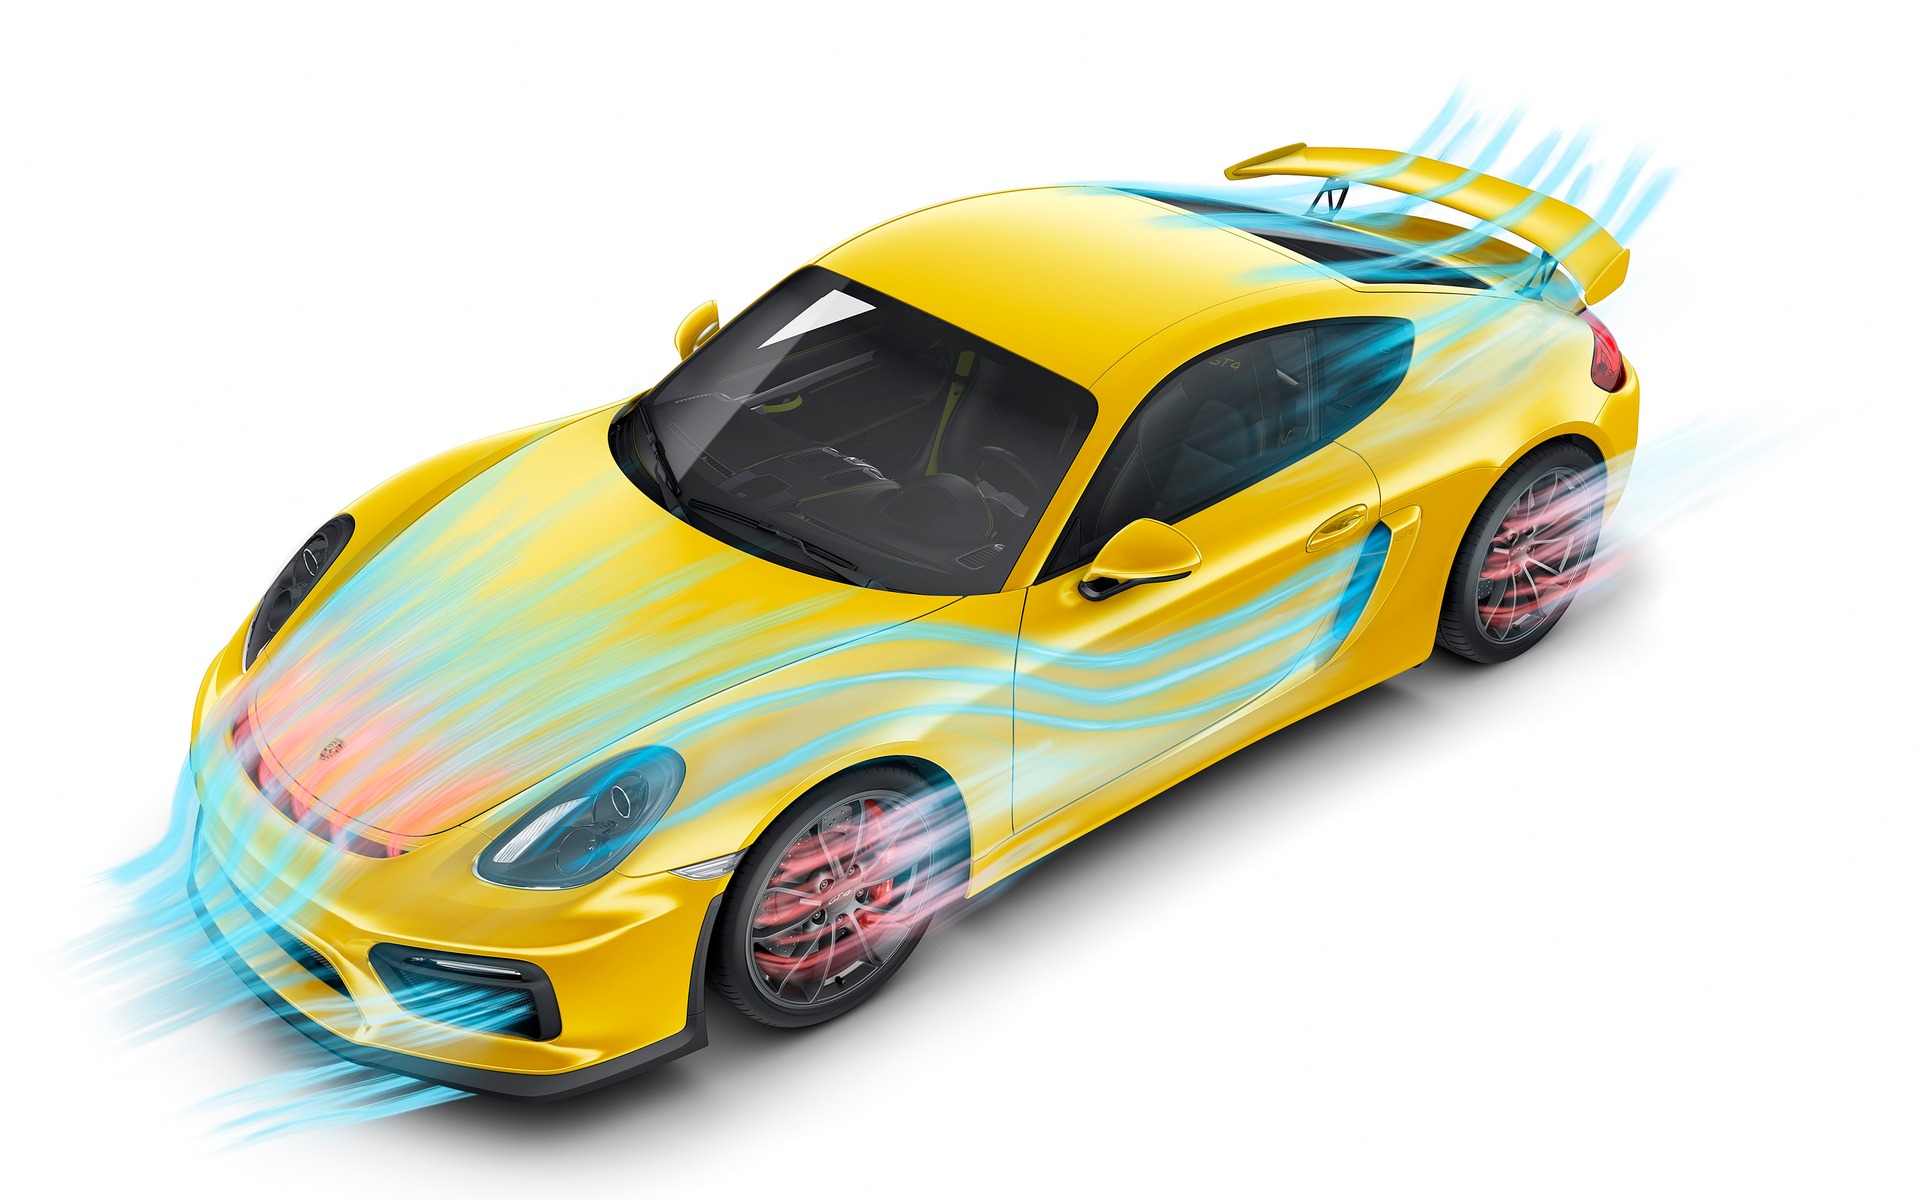 The GT4 offers advanced aerodynamics.